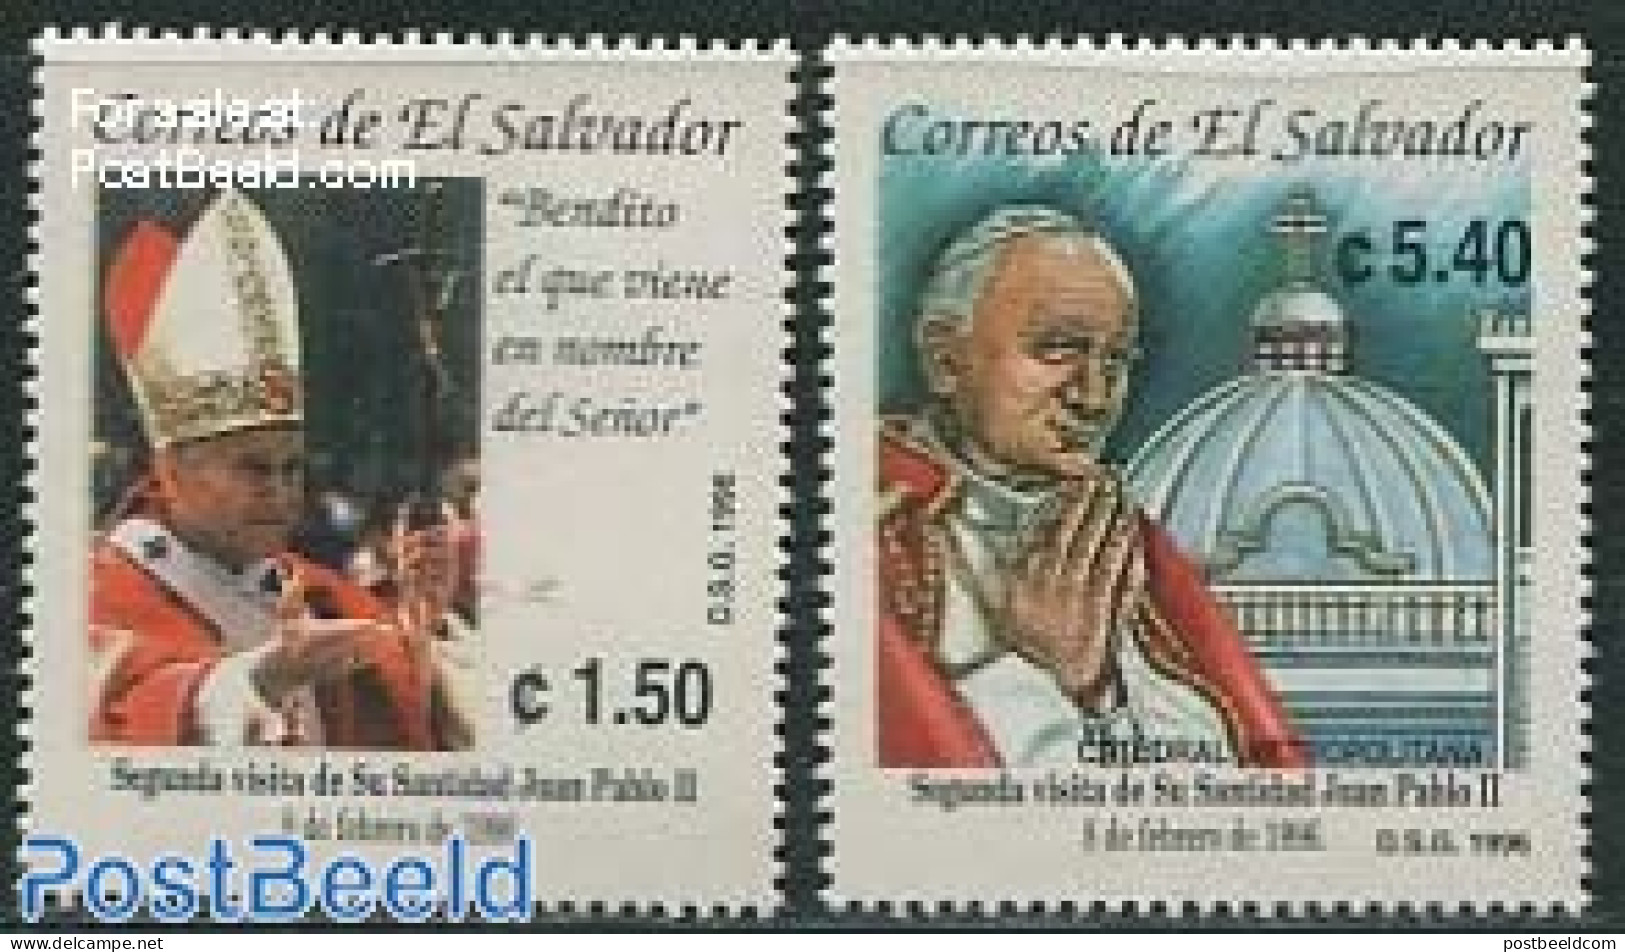 El Salvador 1996 Popes Visit 2v, Mint NH, Religion - Pope - Religion - Päpste